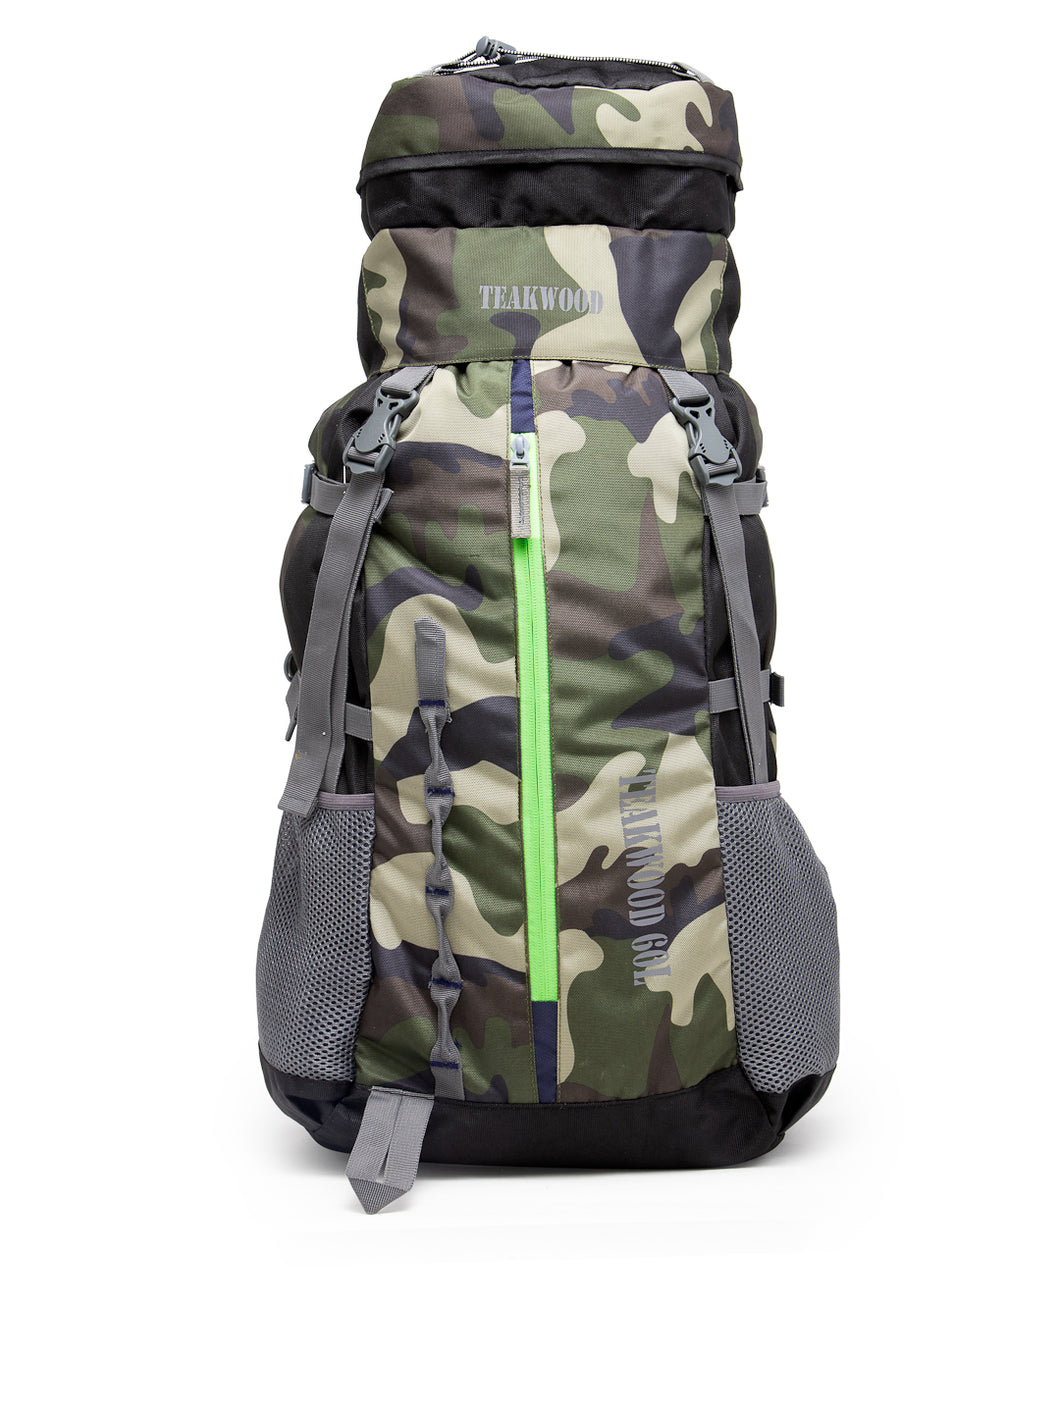 Teakwood Unisex Camouflage Print Travel Backpack with Multiple Pockets||Travel Backpack for Outdoor Sport Camp Hiking Trekking Bag Camping Rucksack